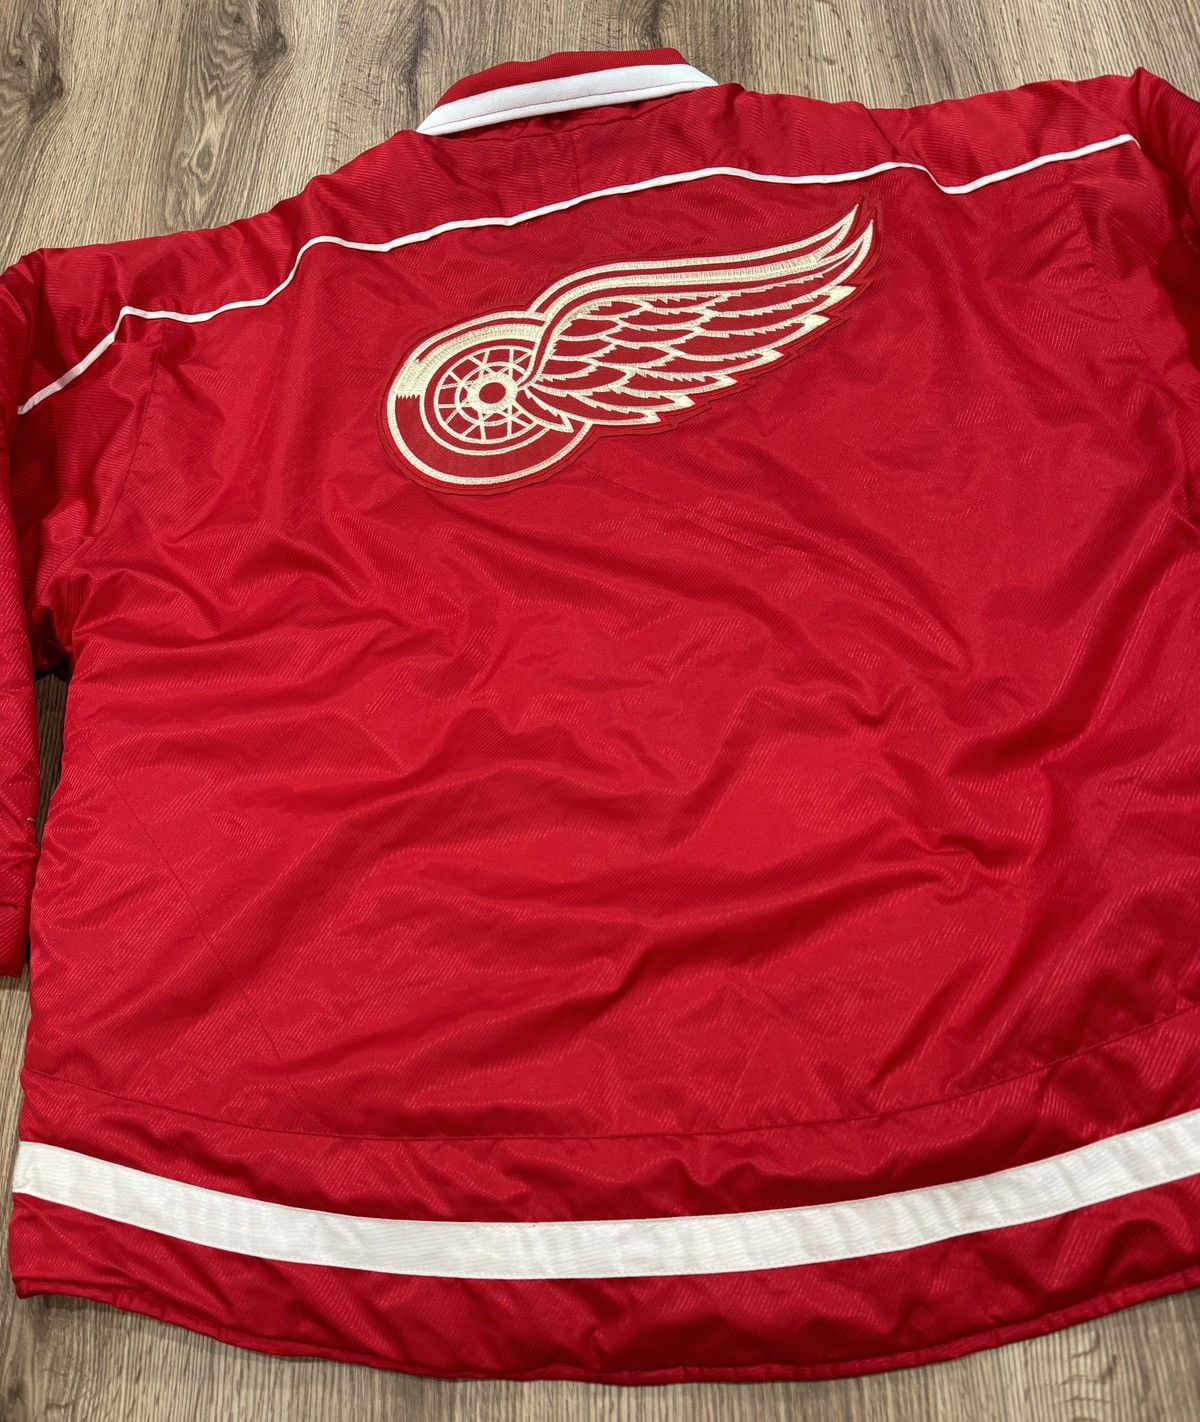 Vintage Vintage Detroit Red Wings NHL Pro Player Embroidered Jacket Size US L / EU 52-54 / 3 - 3 Thumbnail